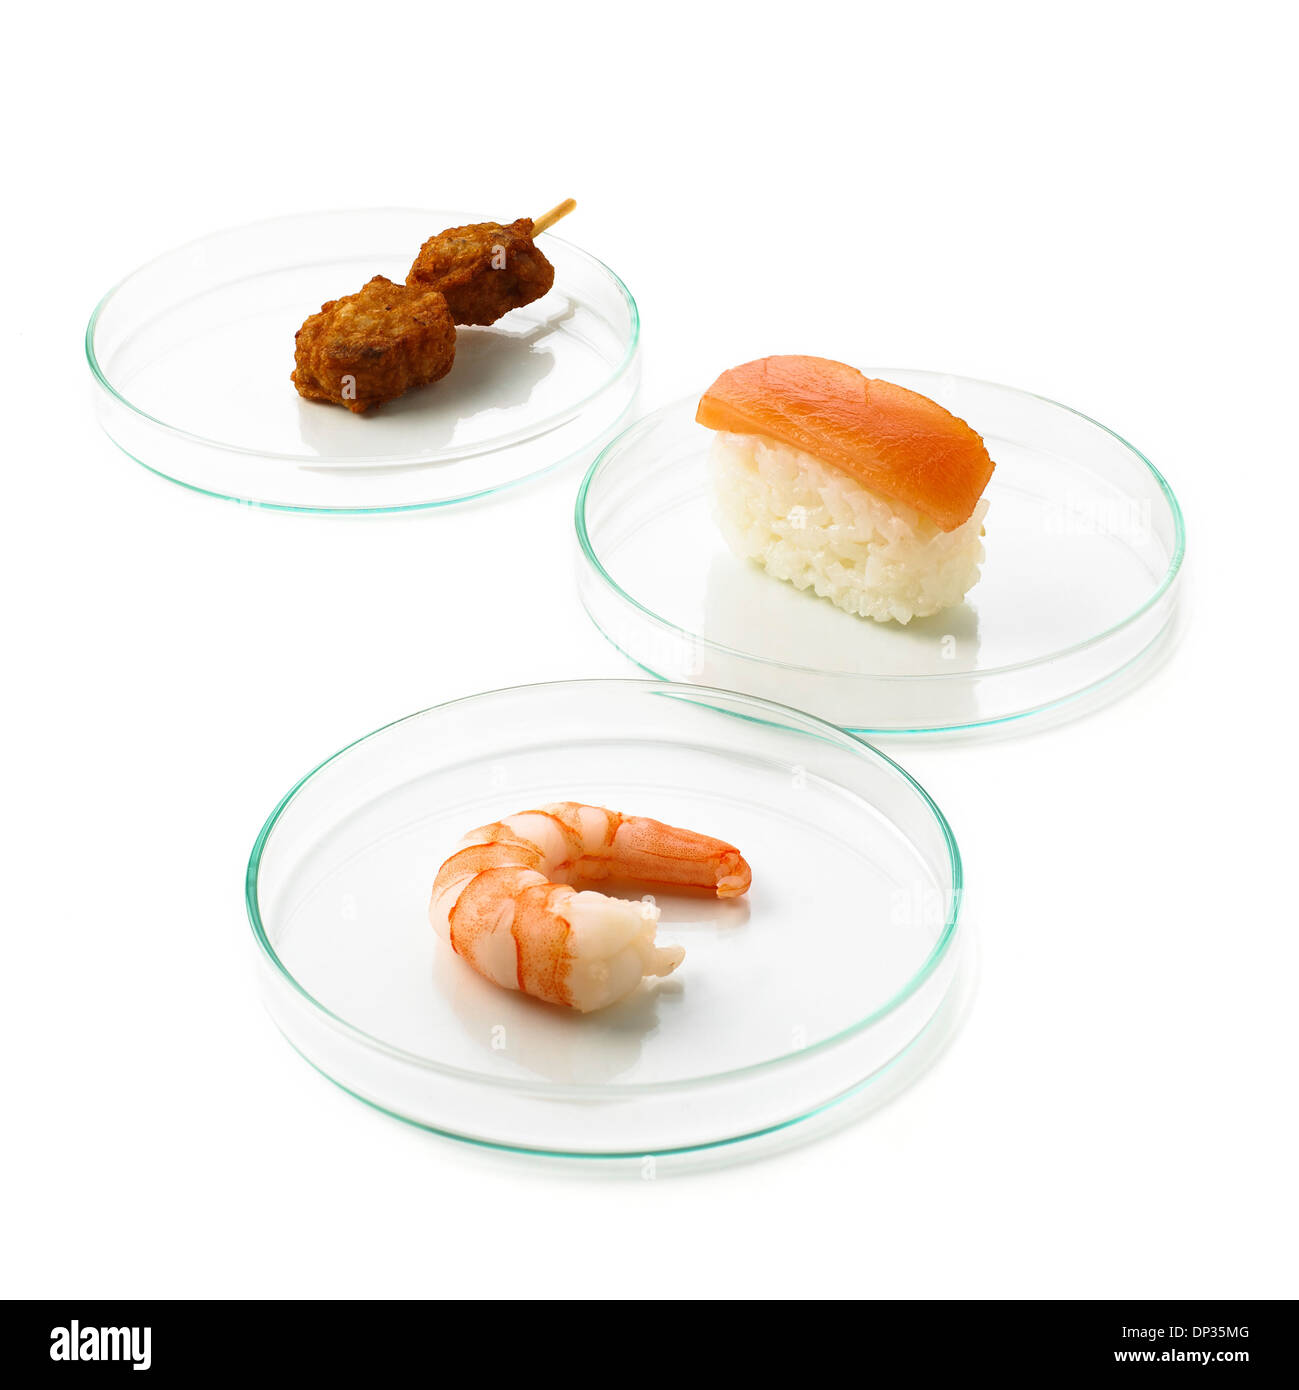 Food testing, conceptual image Stock Photo